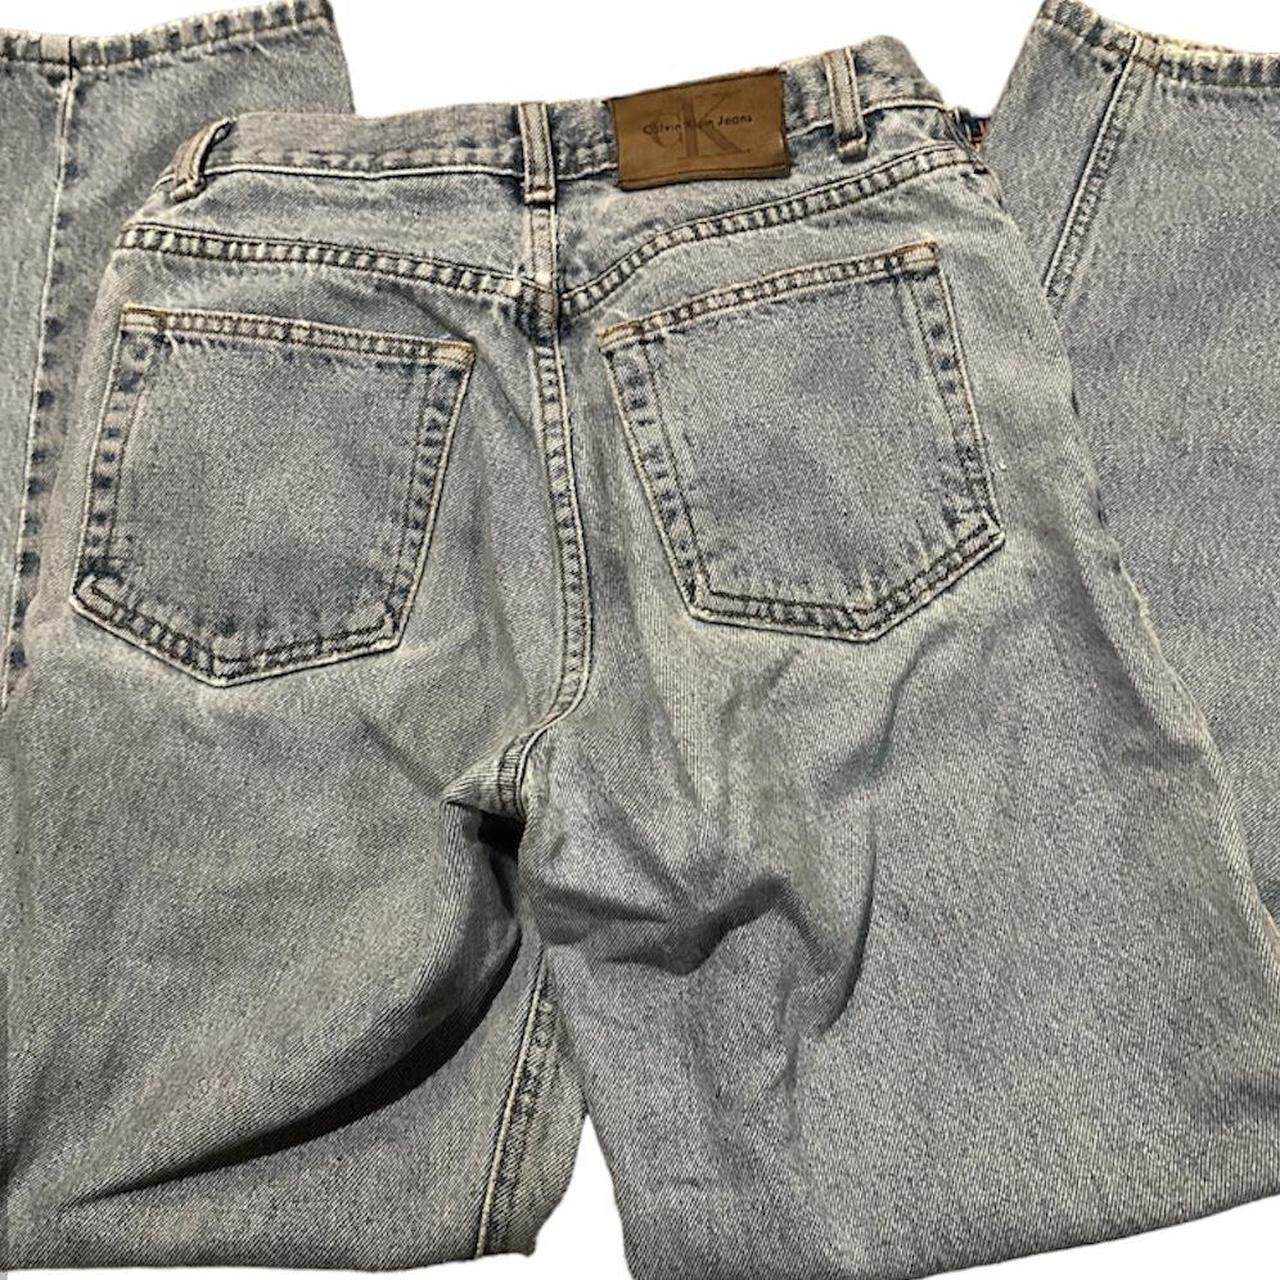 Vintage high wasted Calvin Klein jeans, wear and... - Depop